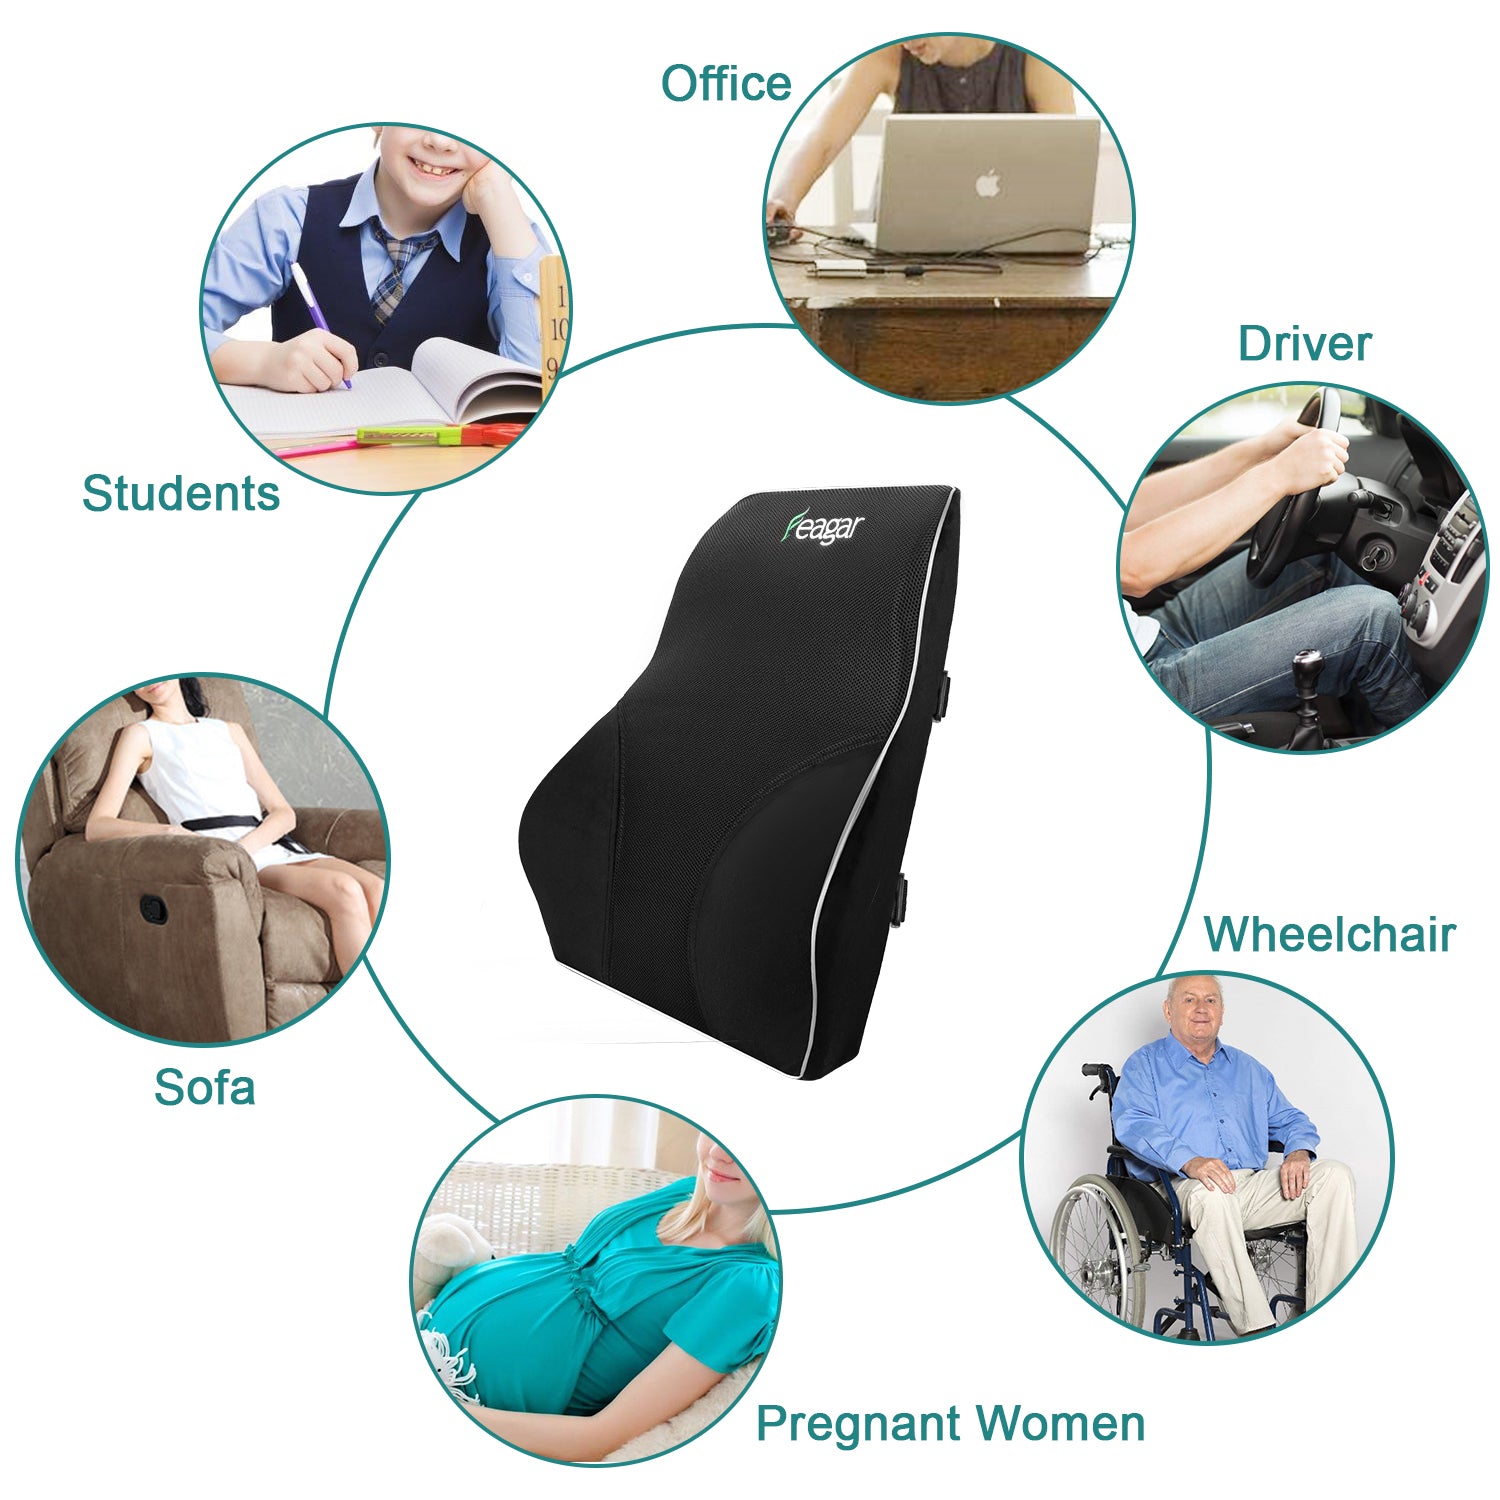 feagar 206-0-cushion Lumbar Support Pillow/Back Cushion, Memory Foam  Orthopedic Backrest for Car Seat, Office/Computer Chair and  Wheelchair,Breathabl